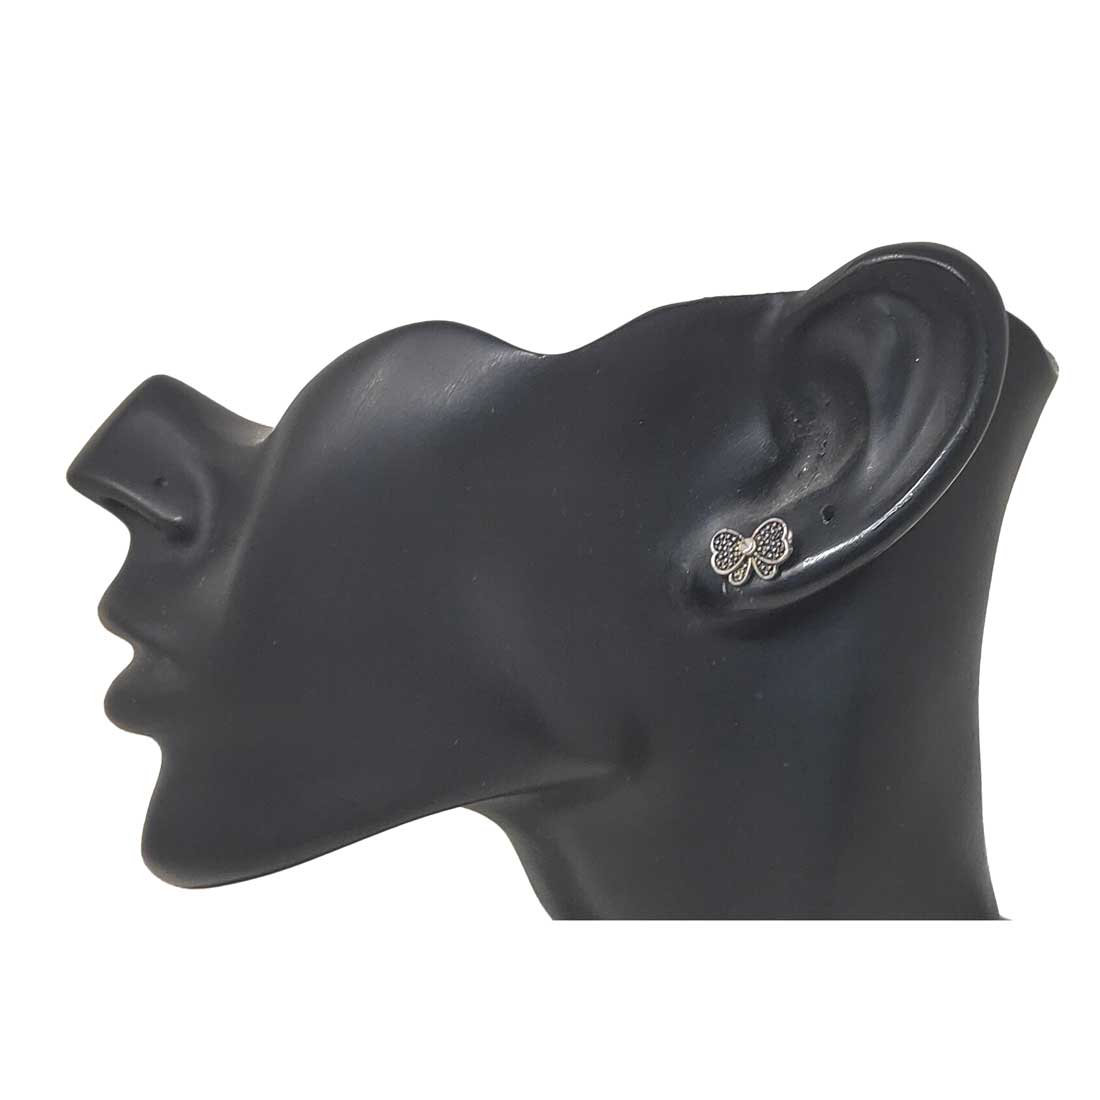 Anokhi Ada Metal Stud Earrings for Girls and Women (Silver)-AG-25